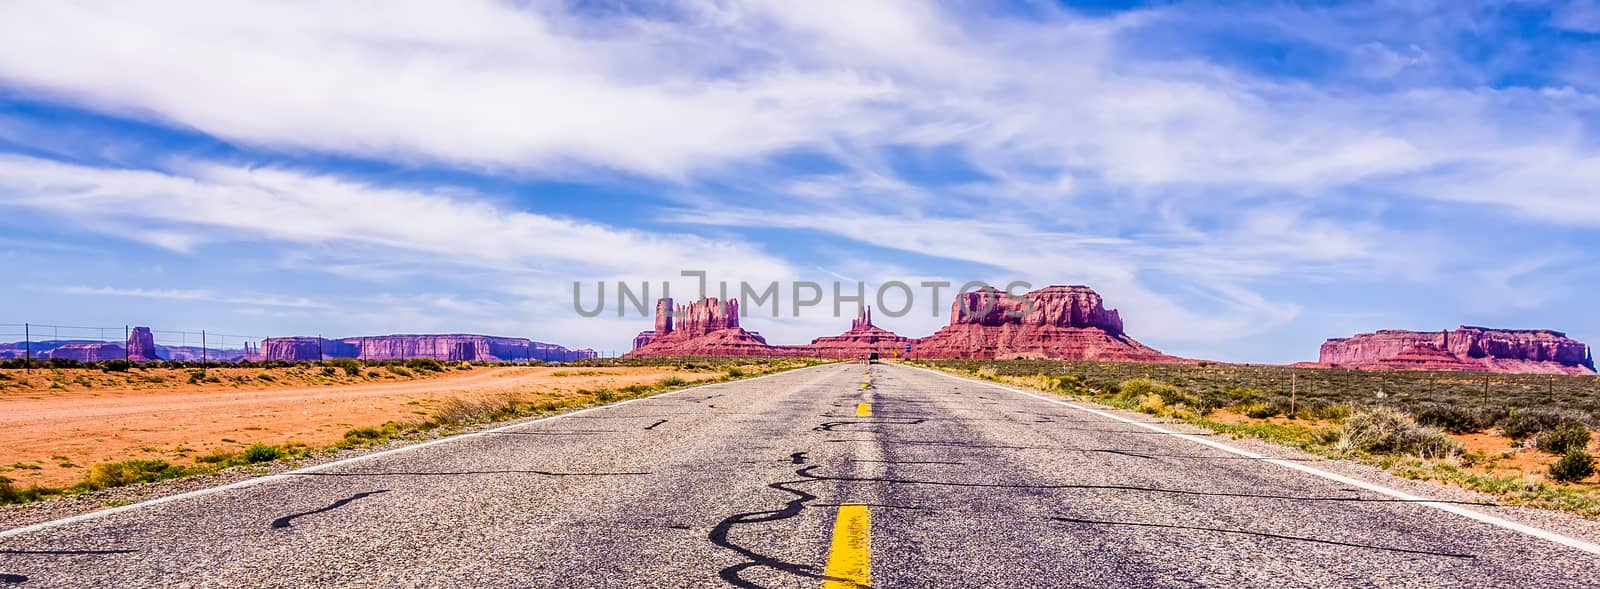 descending into Monument Valley at Utah  Arizona border  by digidreamgrafix